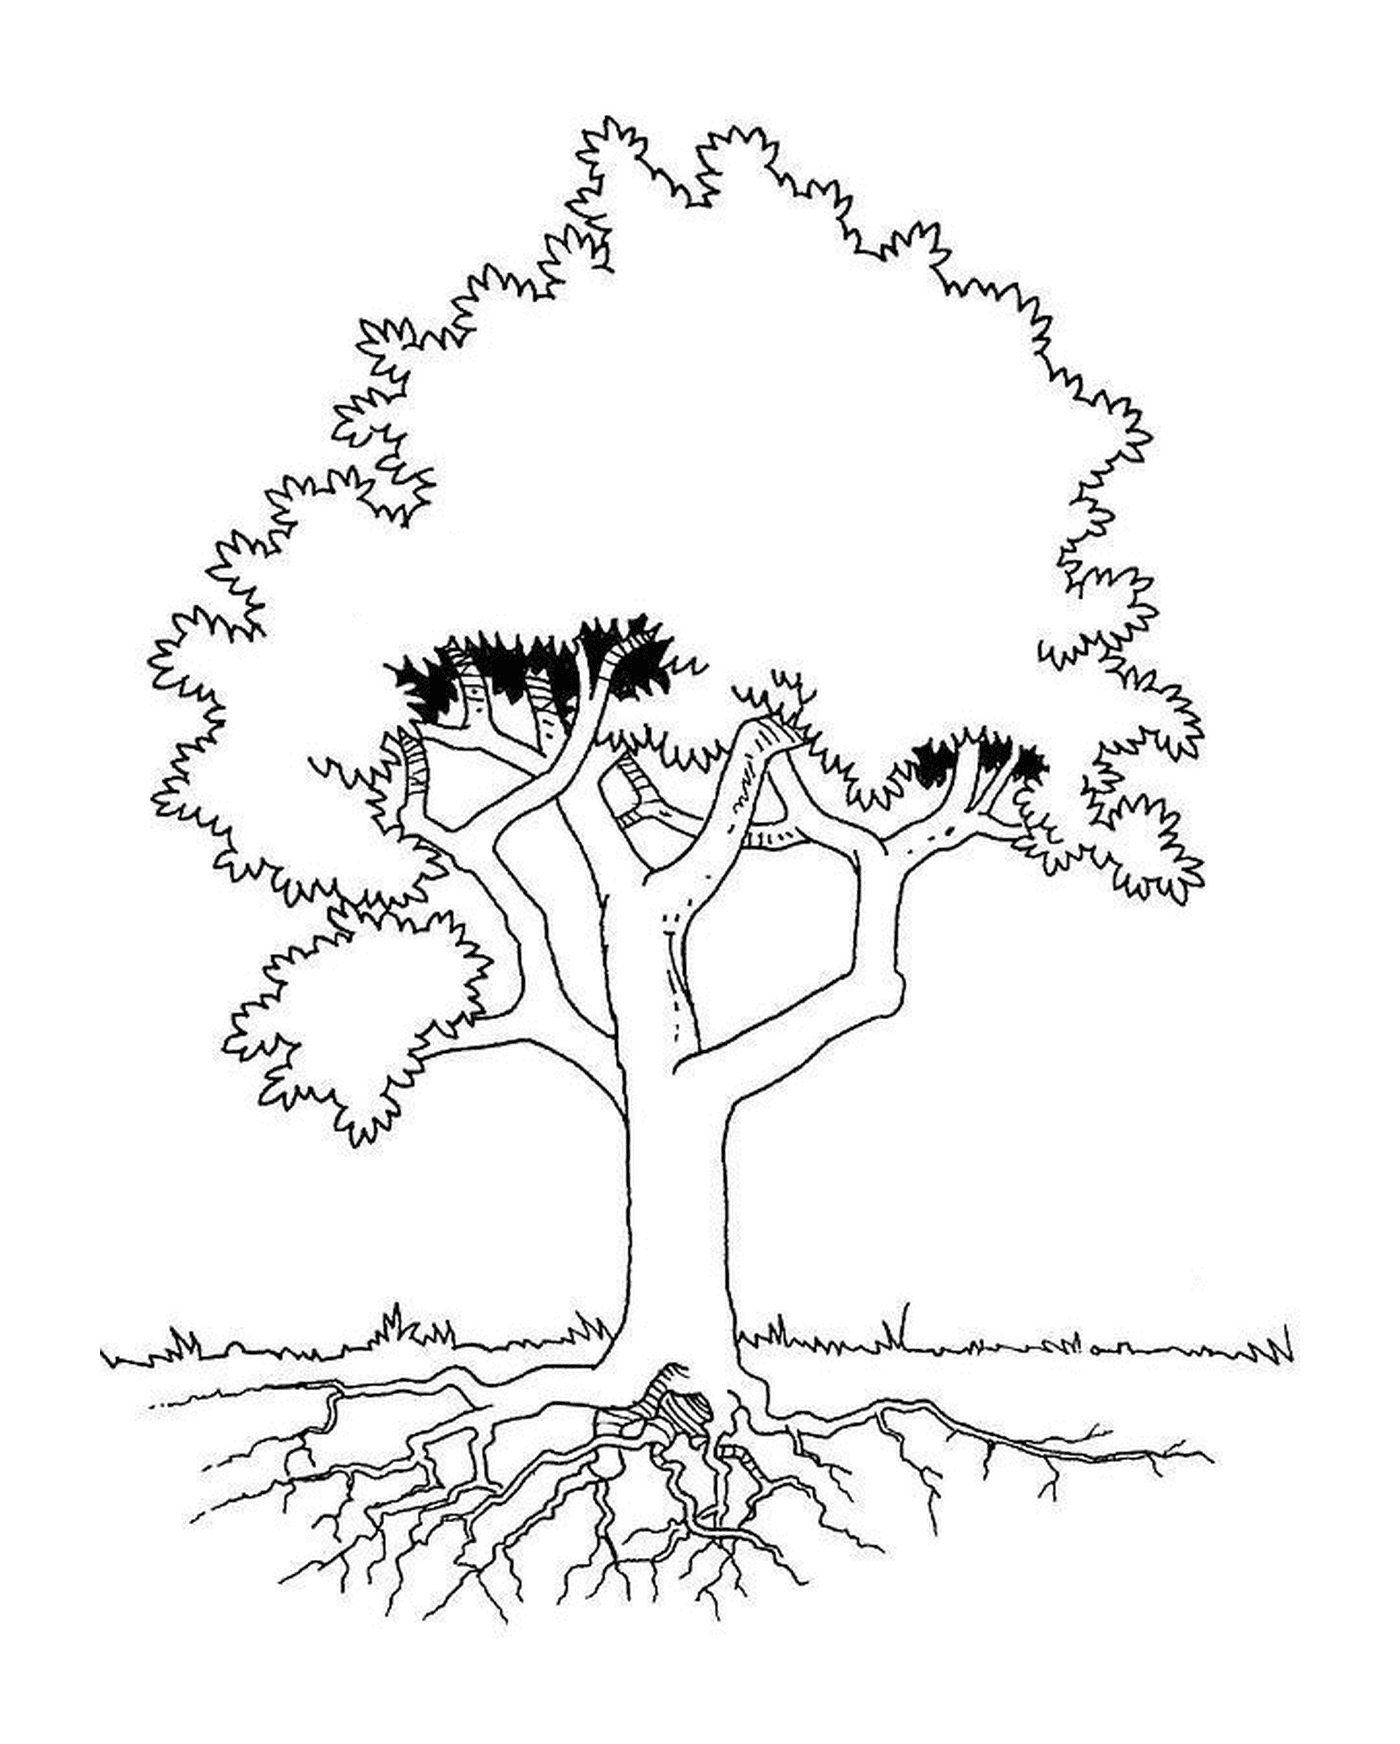   Un arbre avec des racines 